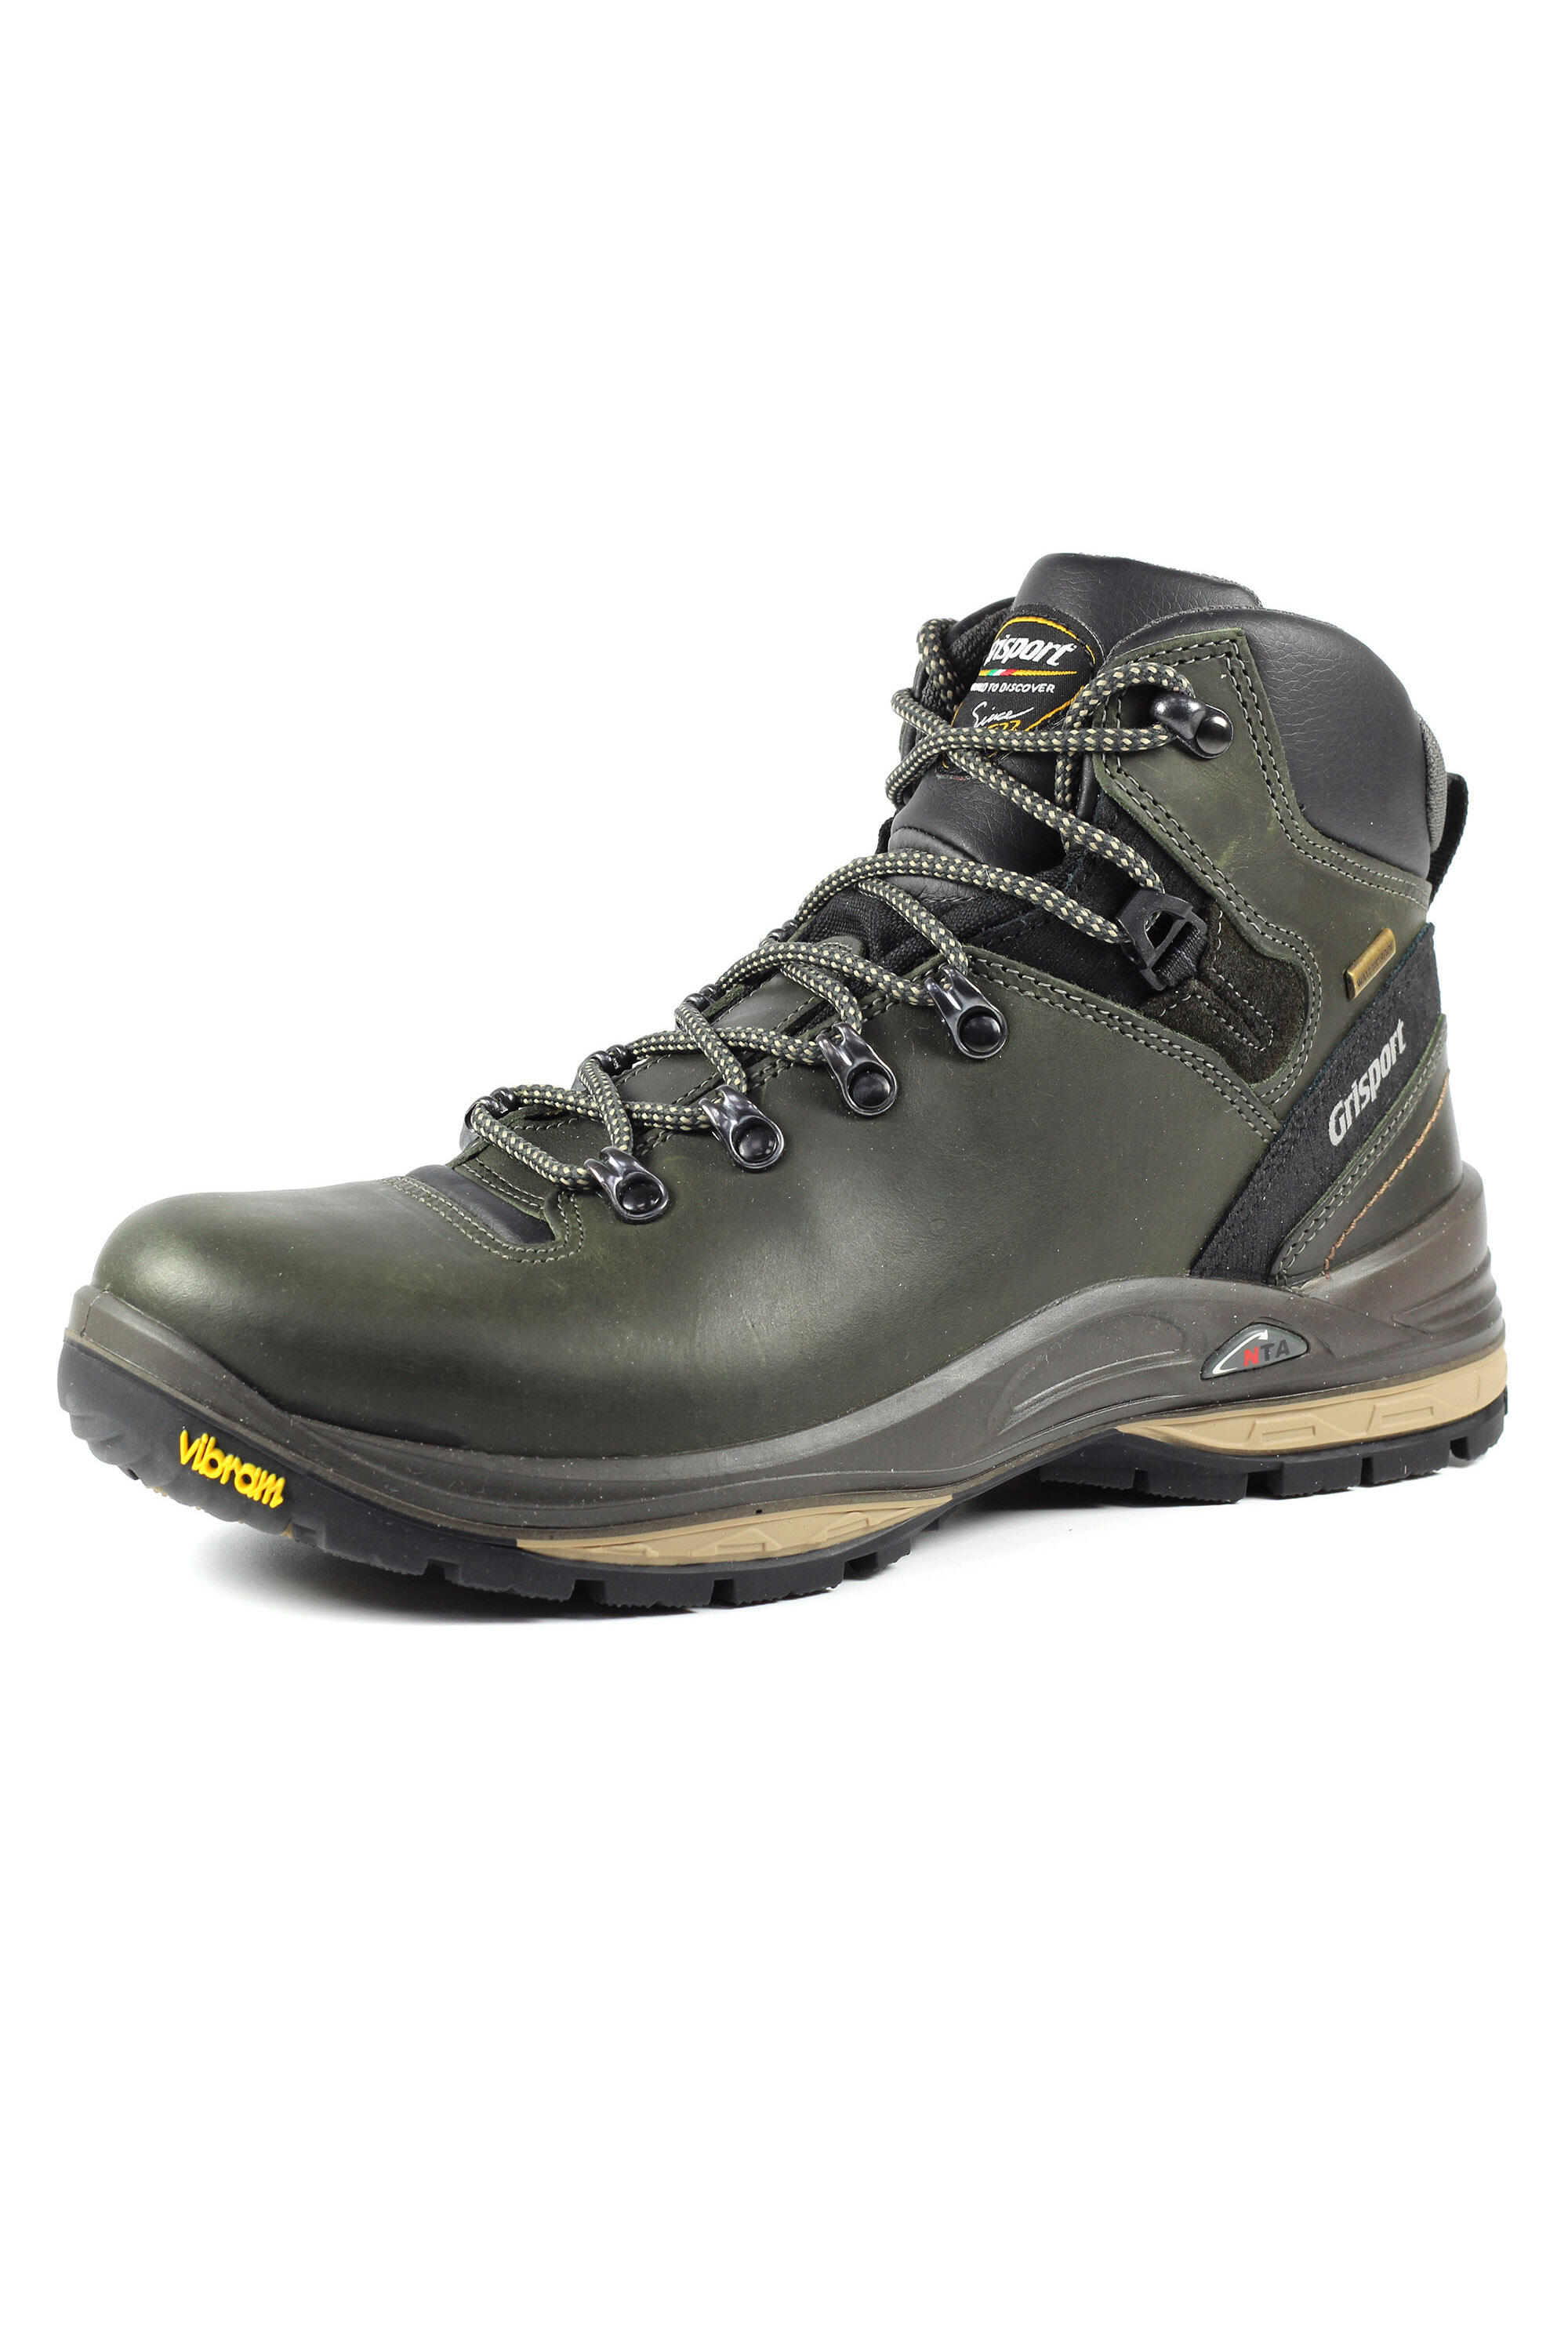 Saracen Olive Warerproof Hiking Boots 3/5